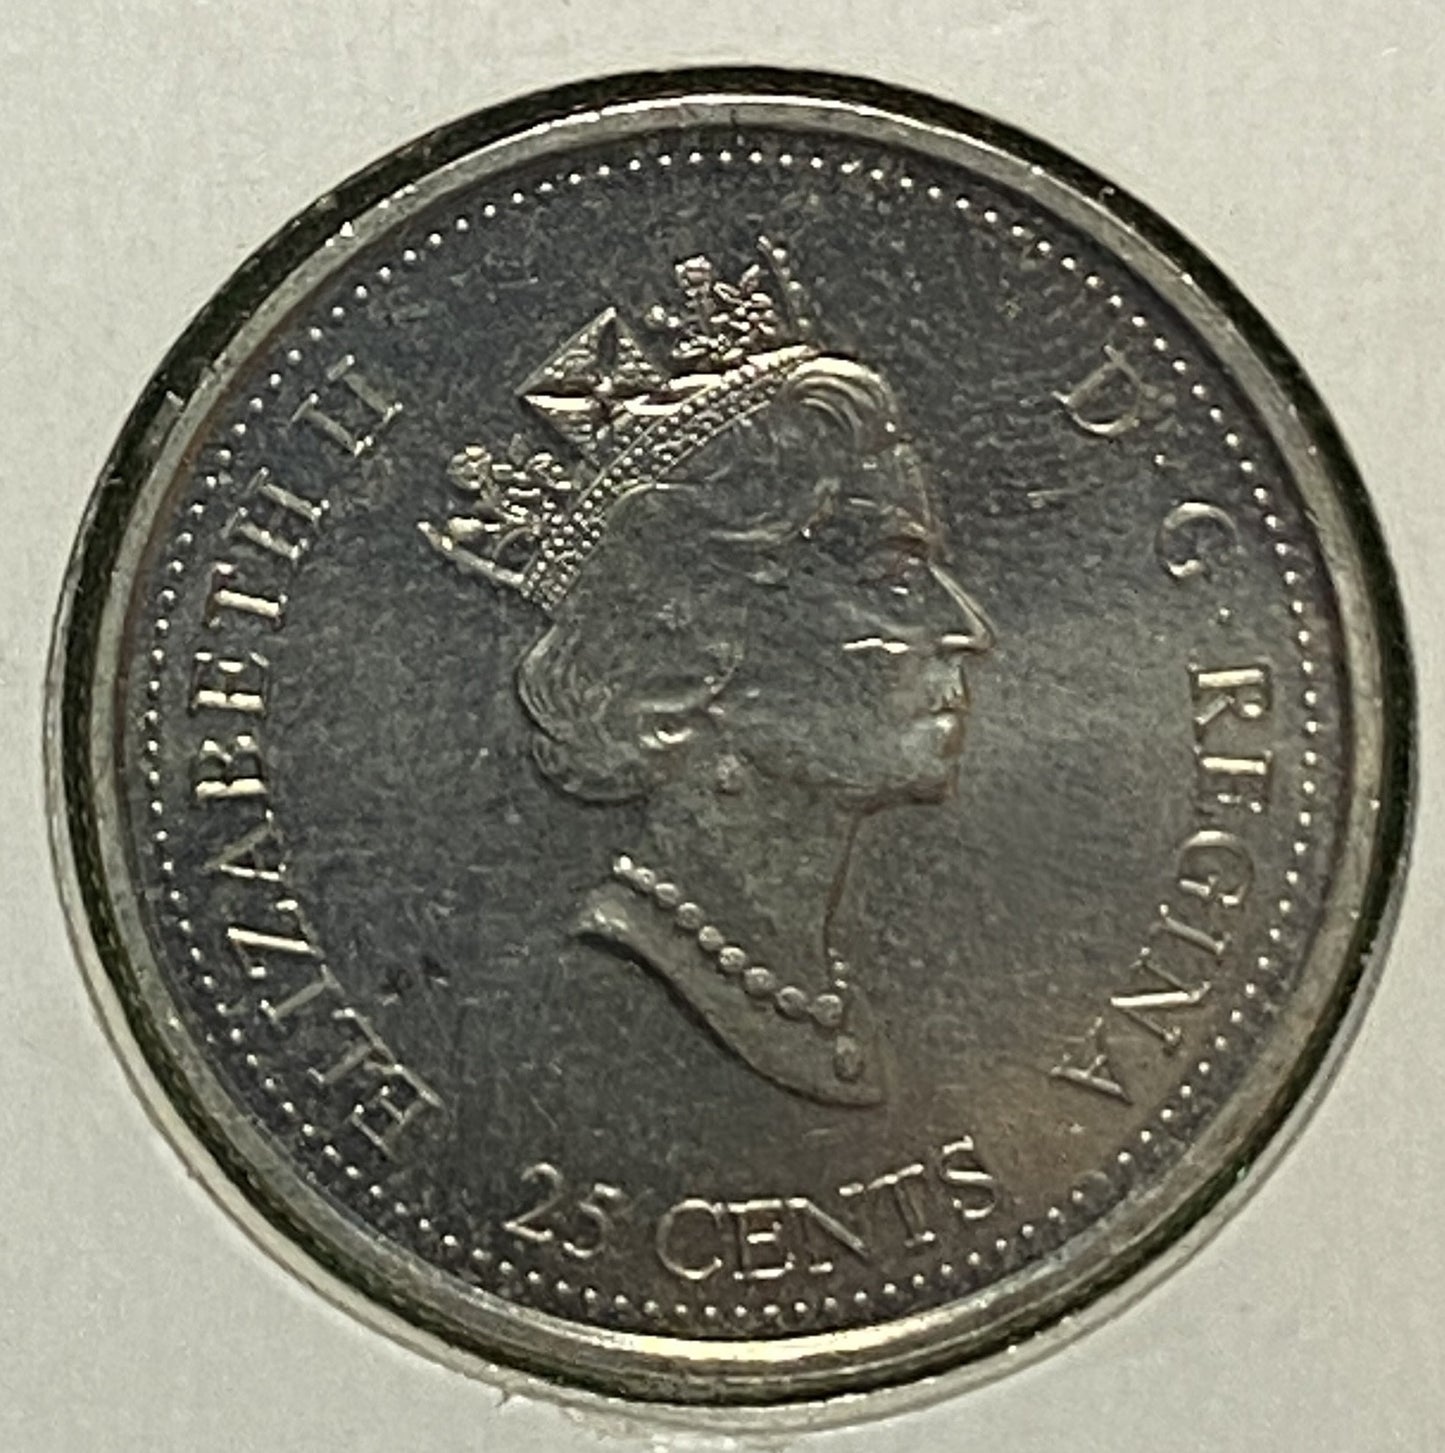 CANADIAN 1999 MILLENNIUM OCTOBER Queen Elizabeth II  25 CENTS QUARTER COIN AU / UNC CONDITION